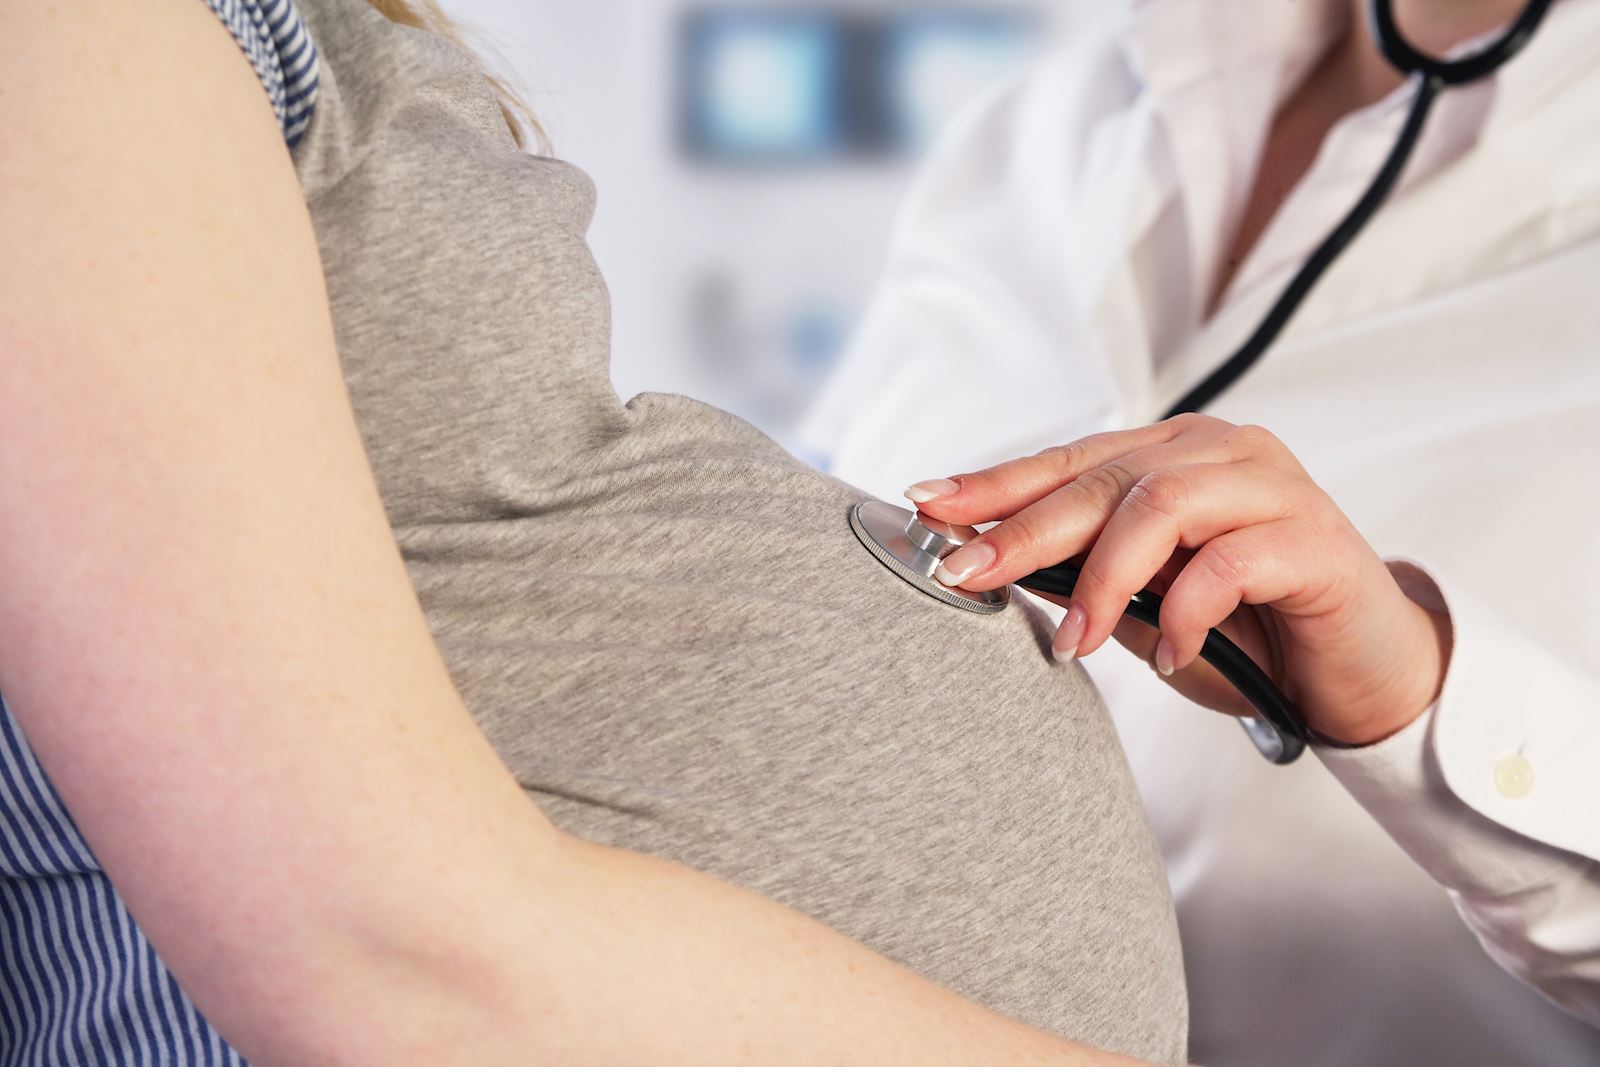 Tackling Americas rising maternal mortality rate